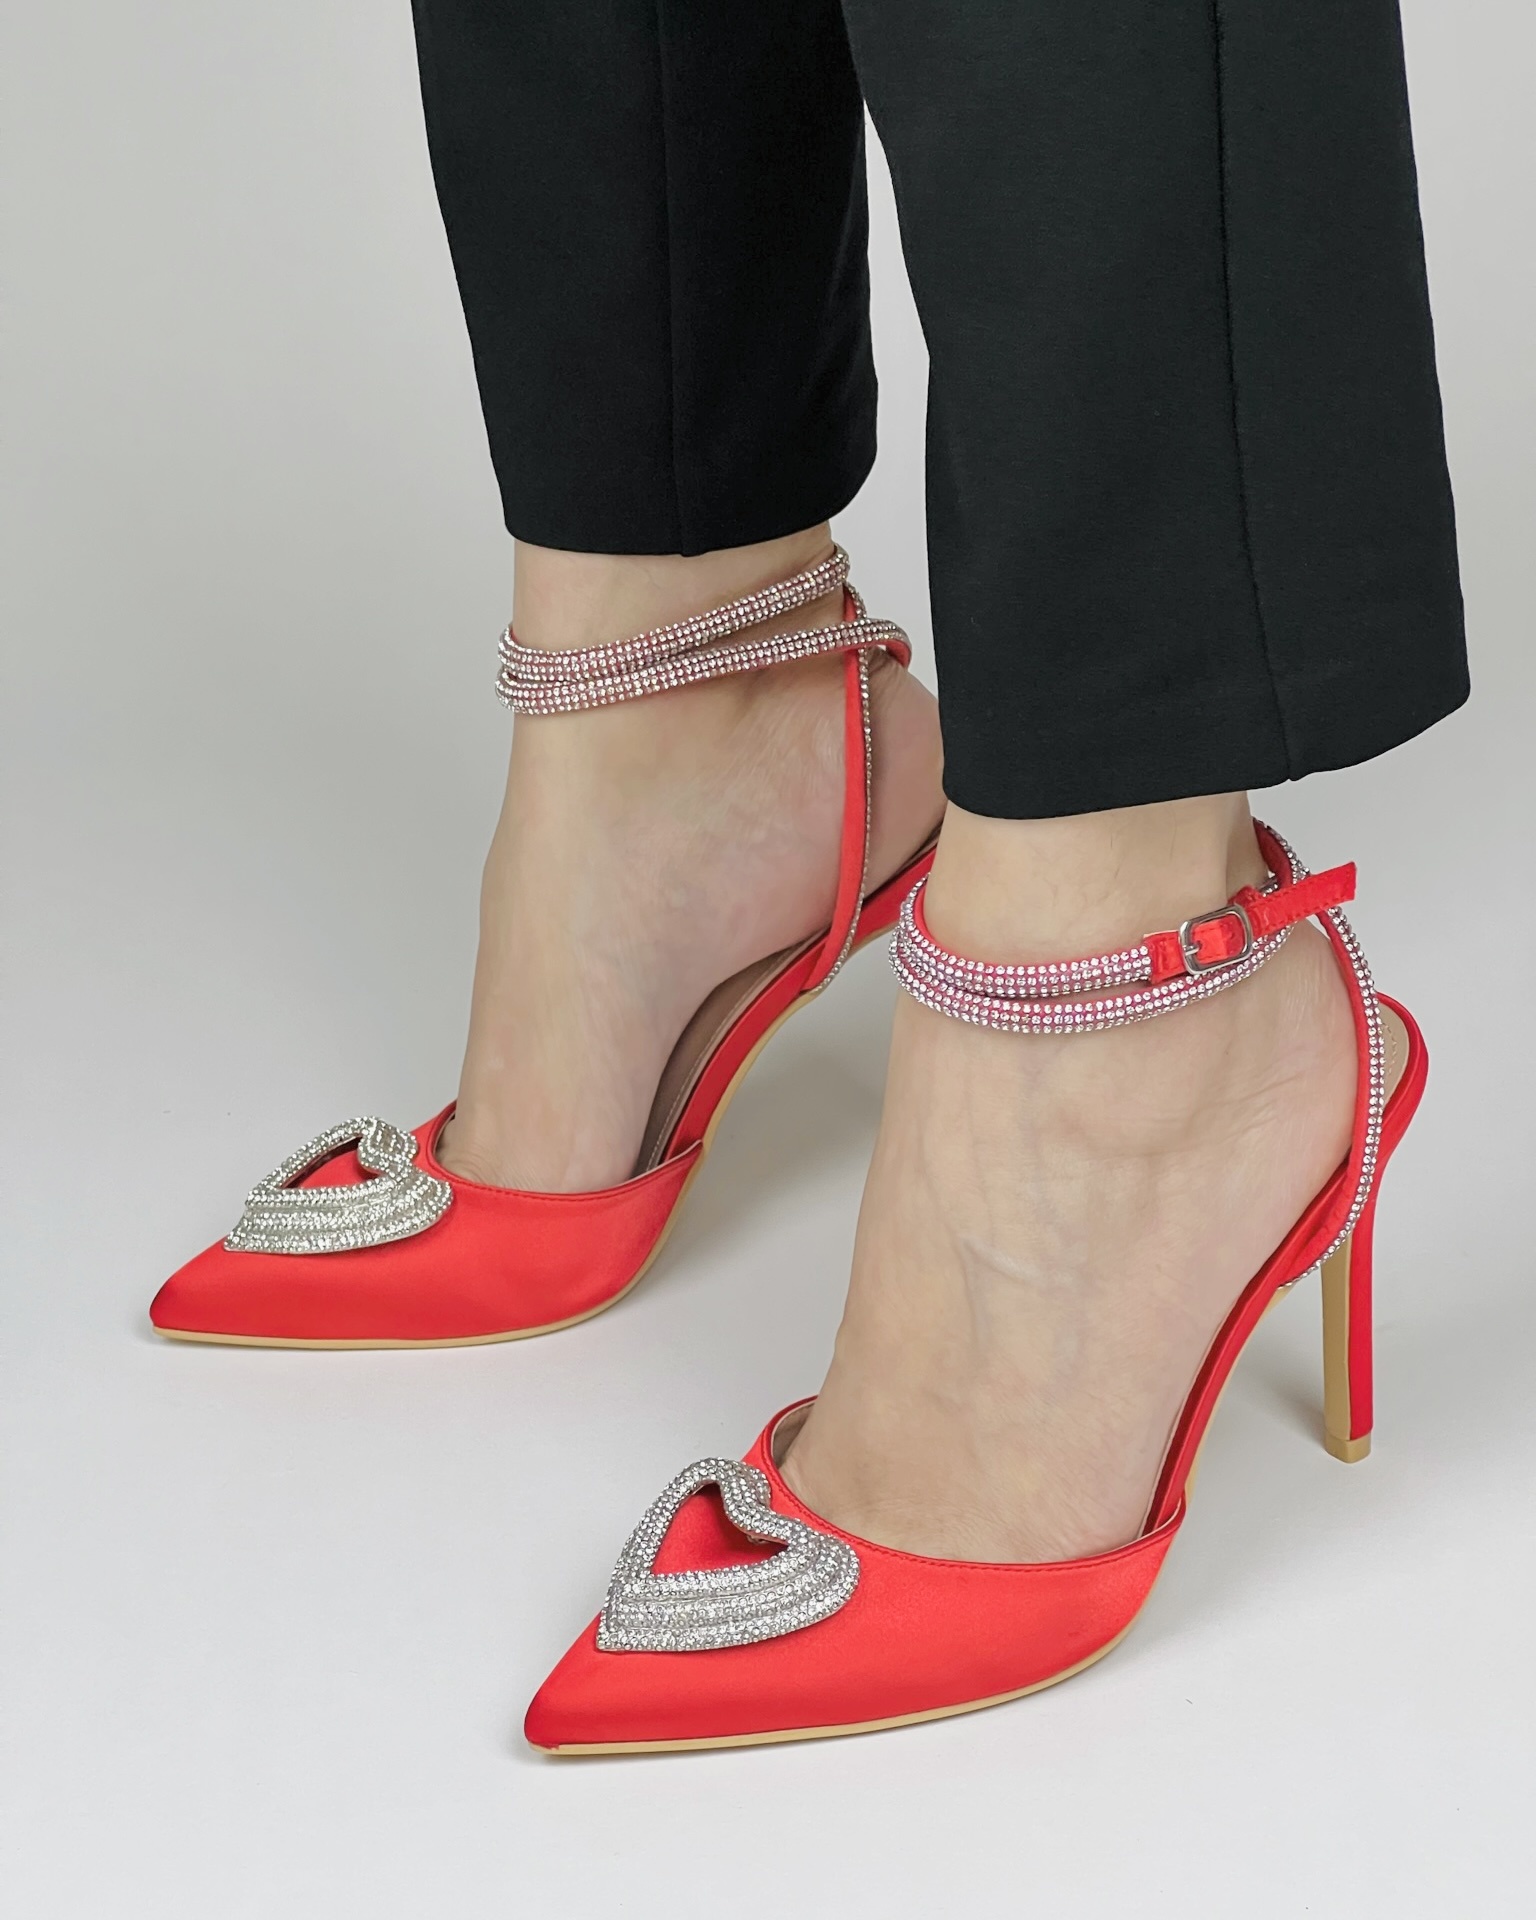 Gianni Bini Sequin Heels for Women | Mercari